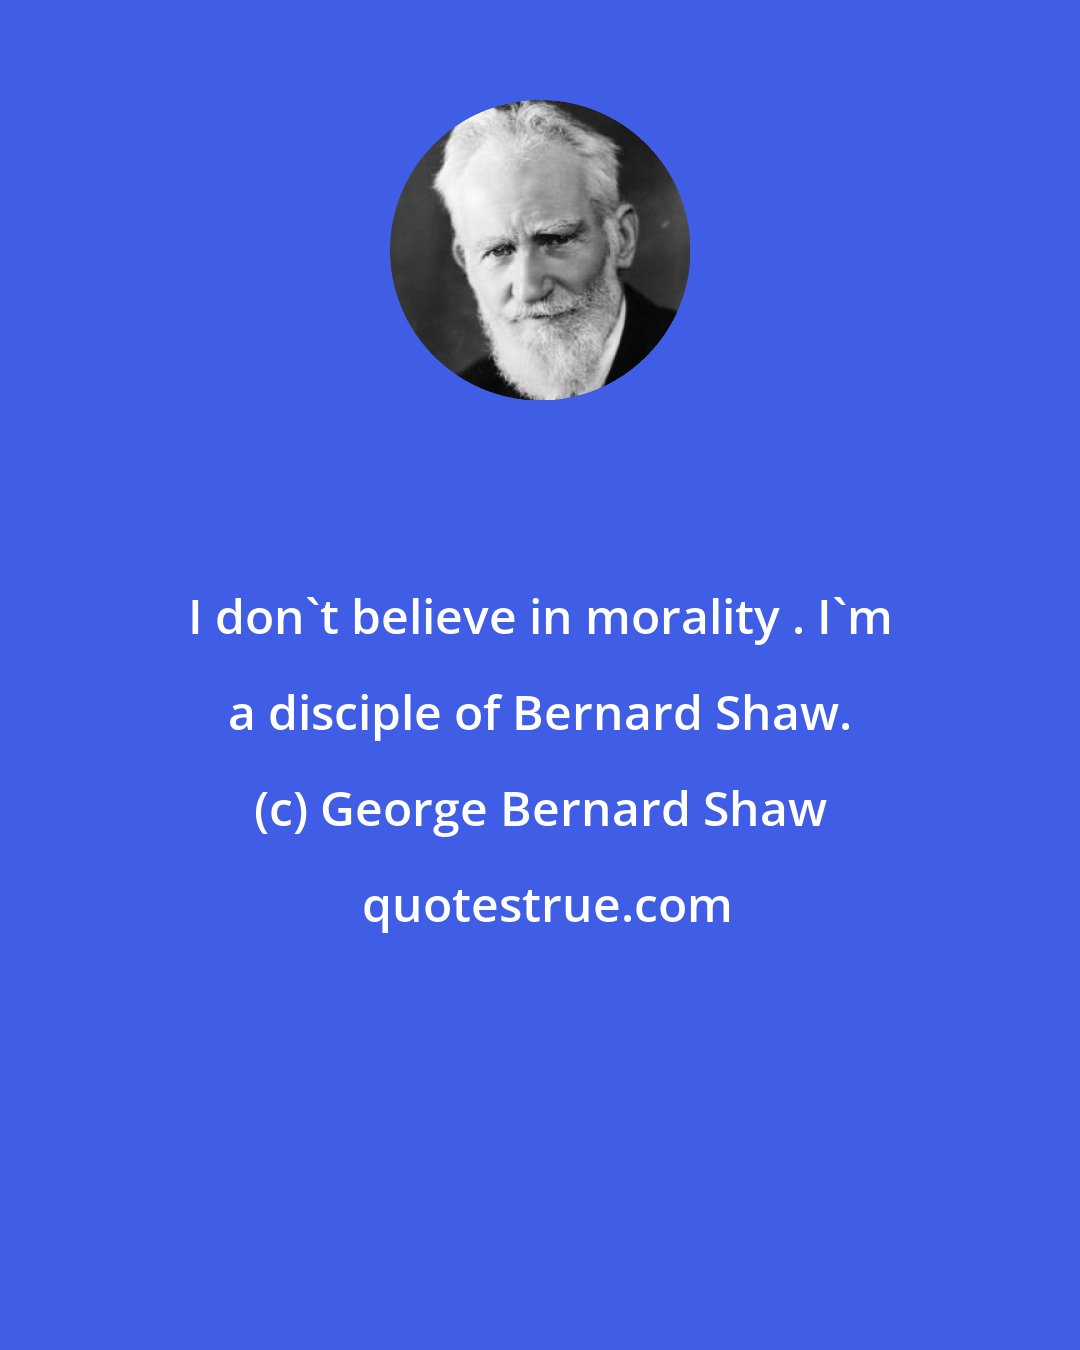 George Bernard Shaw: I don't believe in morality . I'm a disciple of Bernard Shaw.